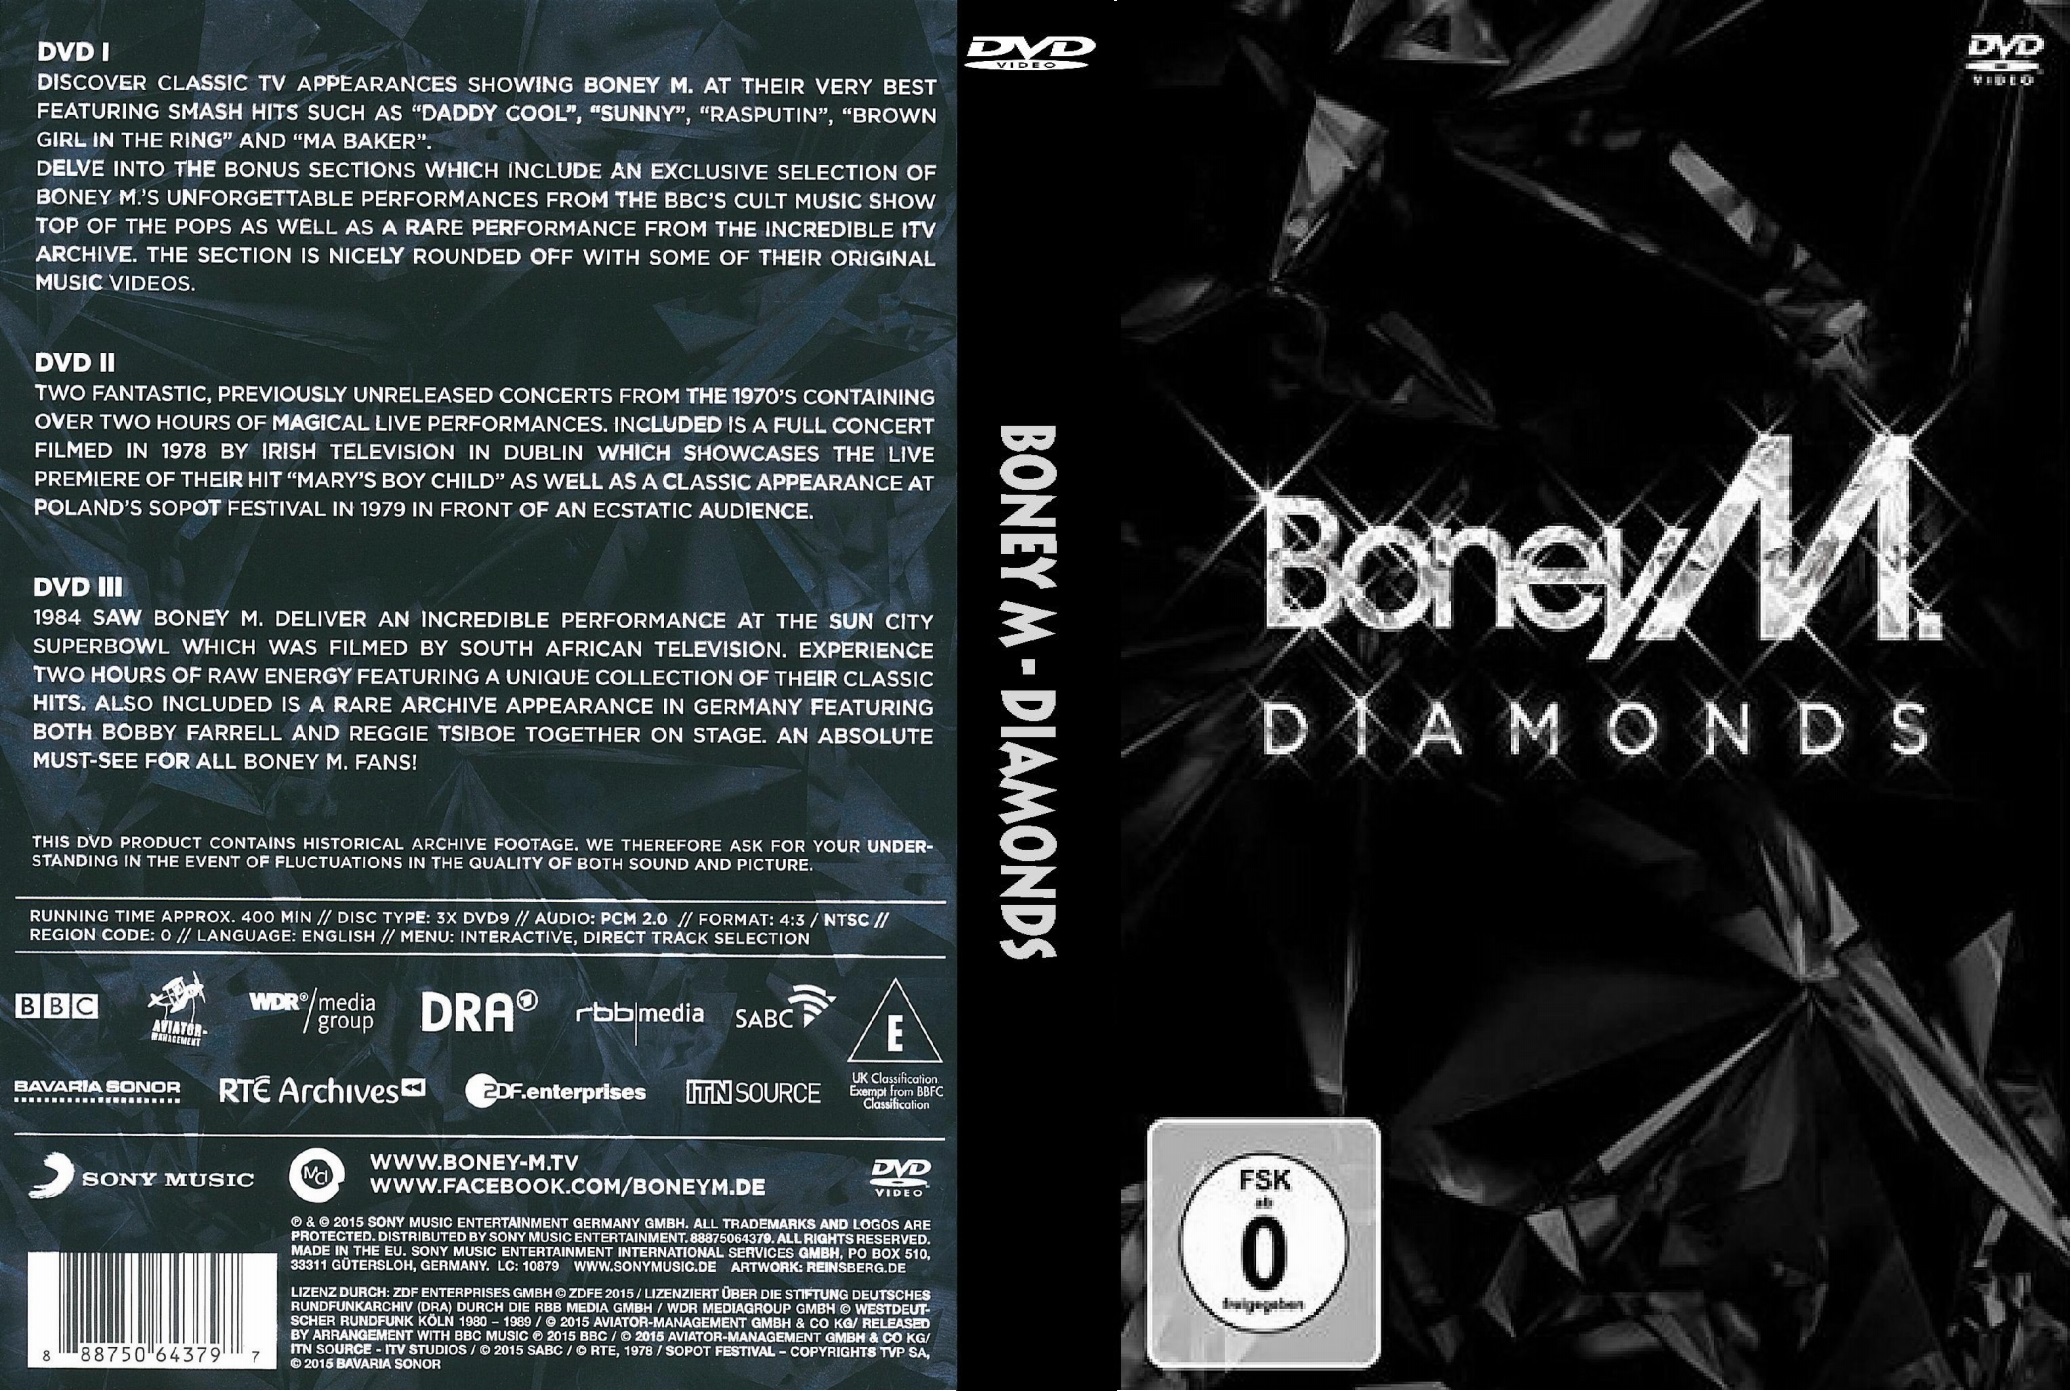 Jaquette DVD Boney M  Diamonds 3 DVD